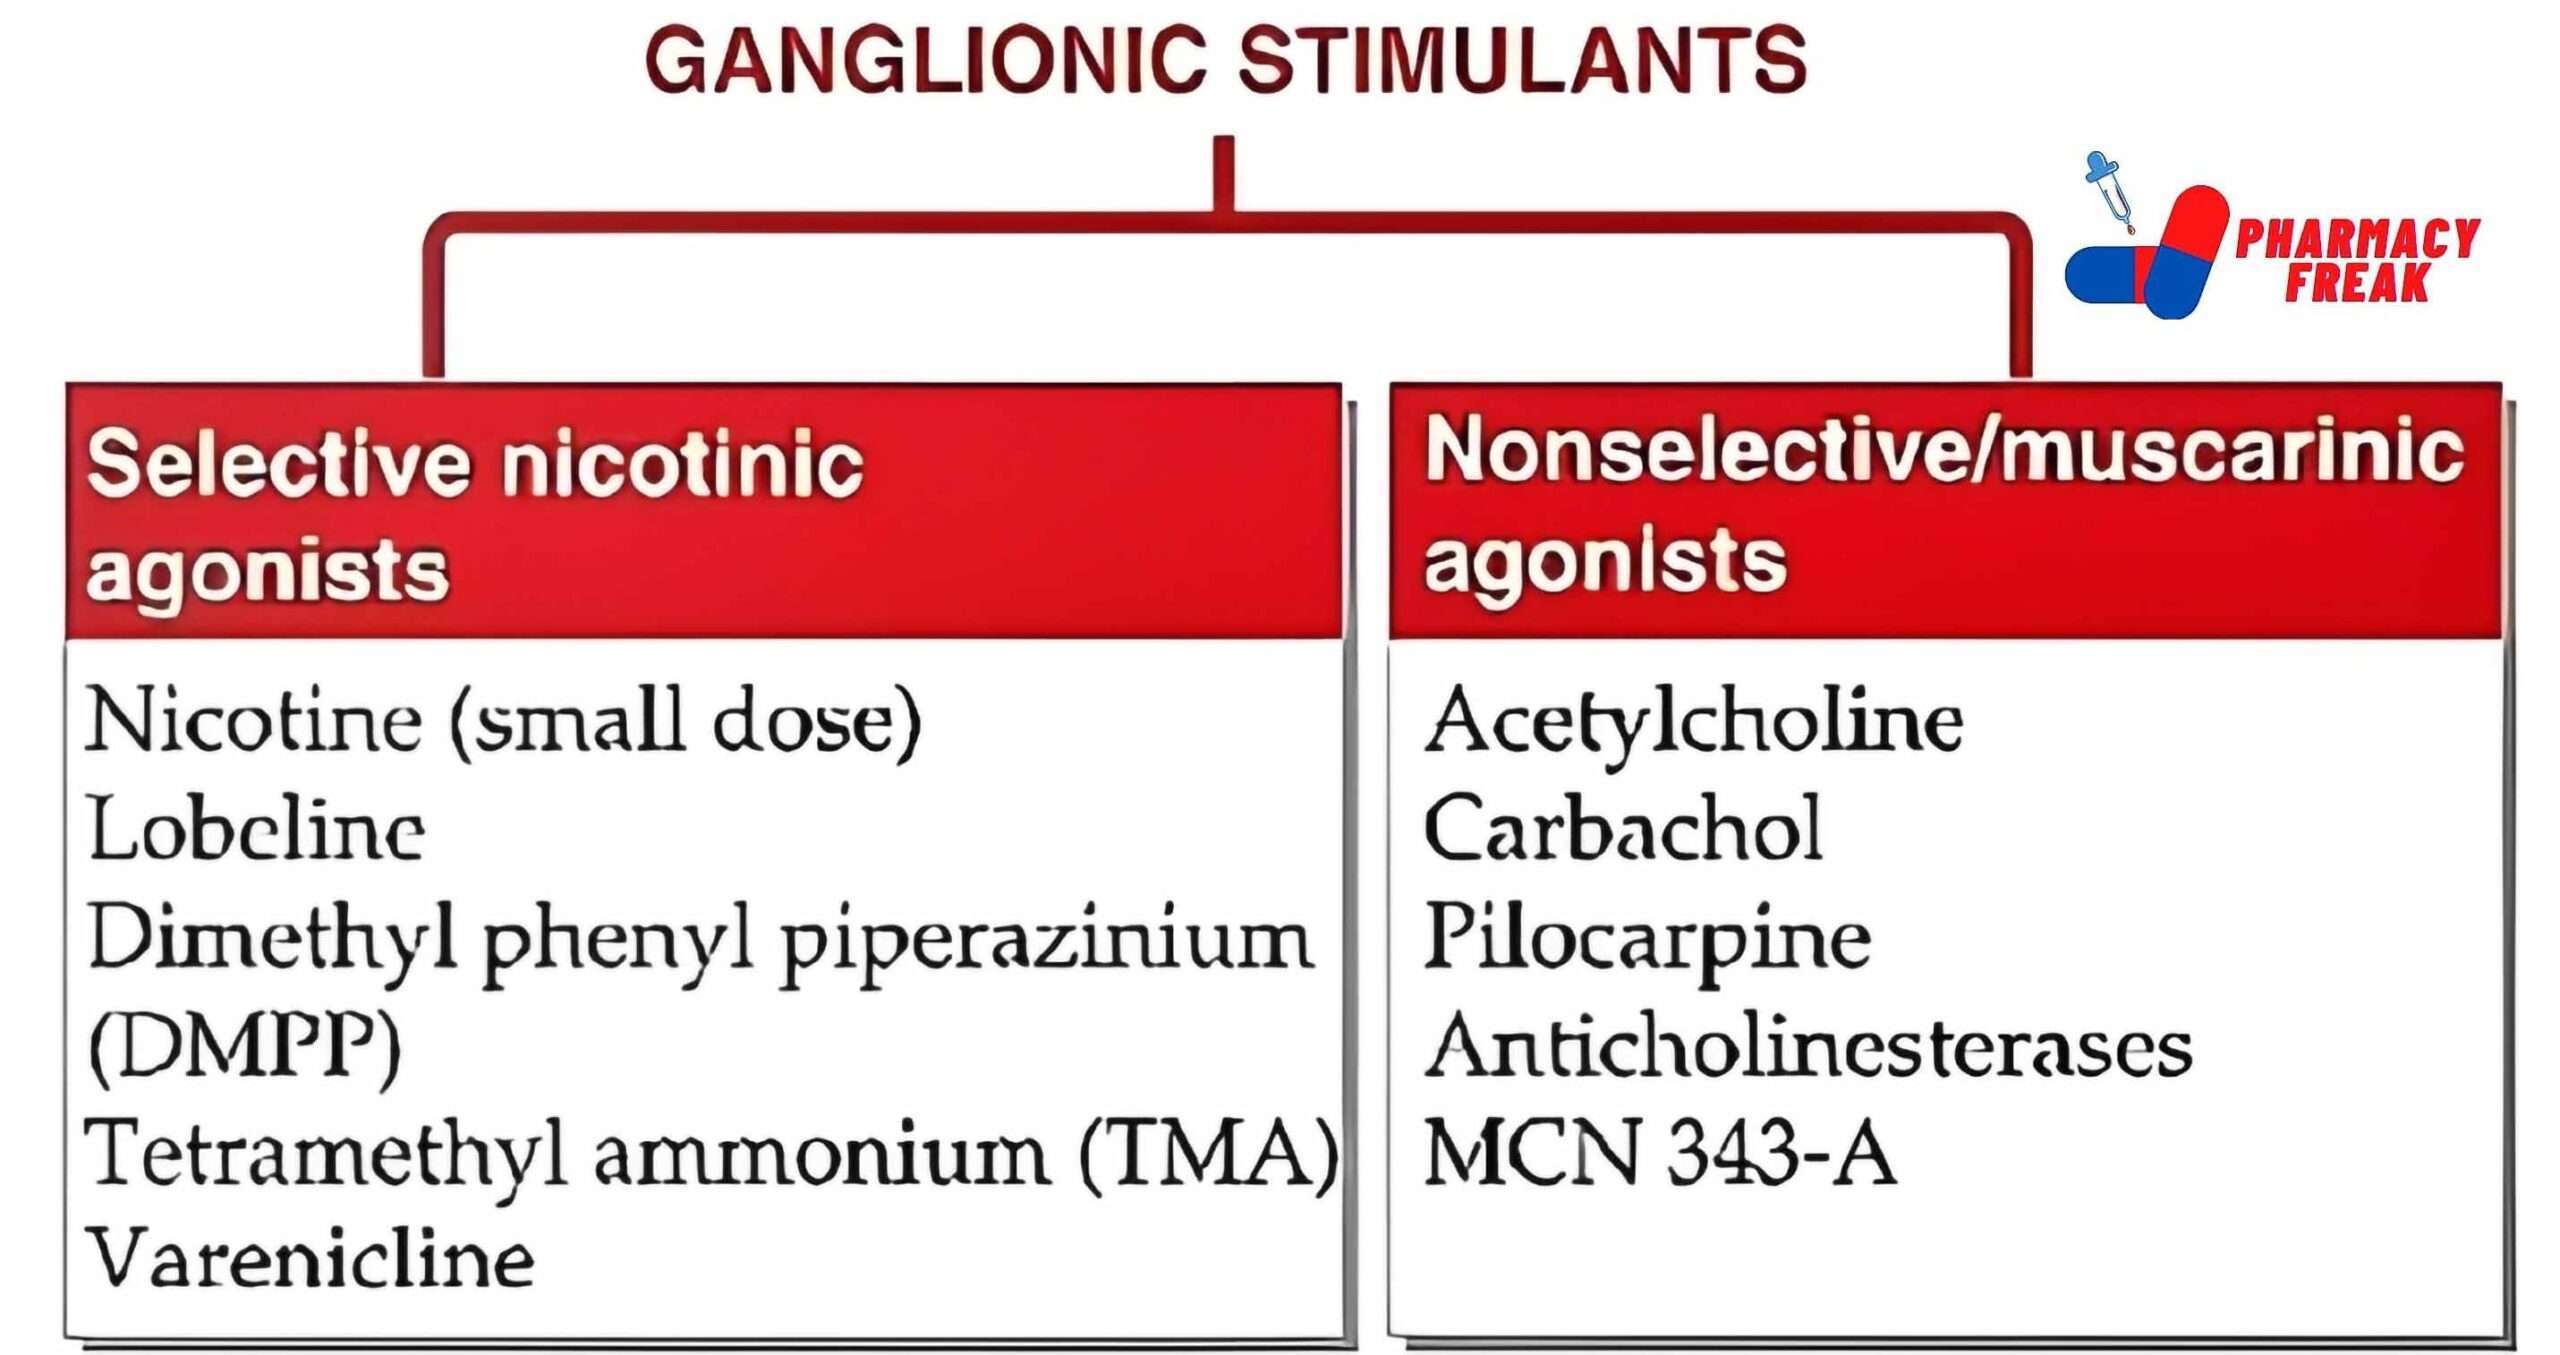 classification of ganglionic stimulants